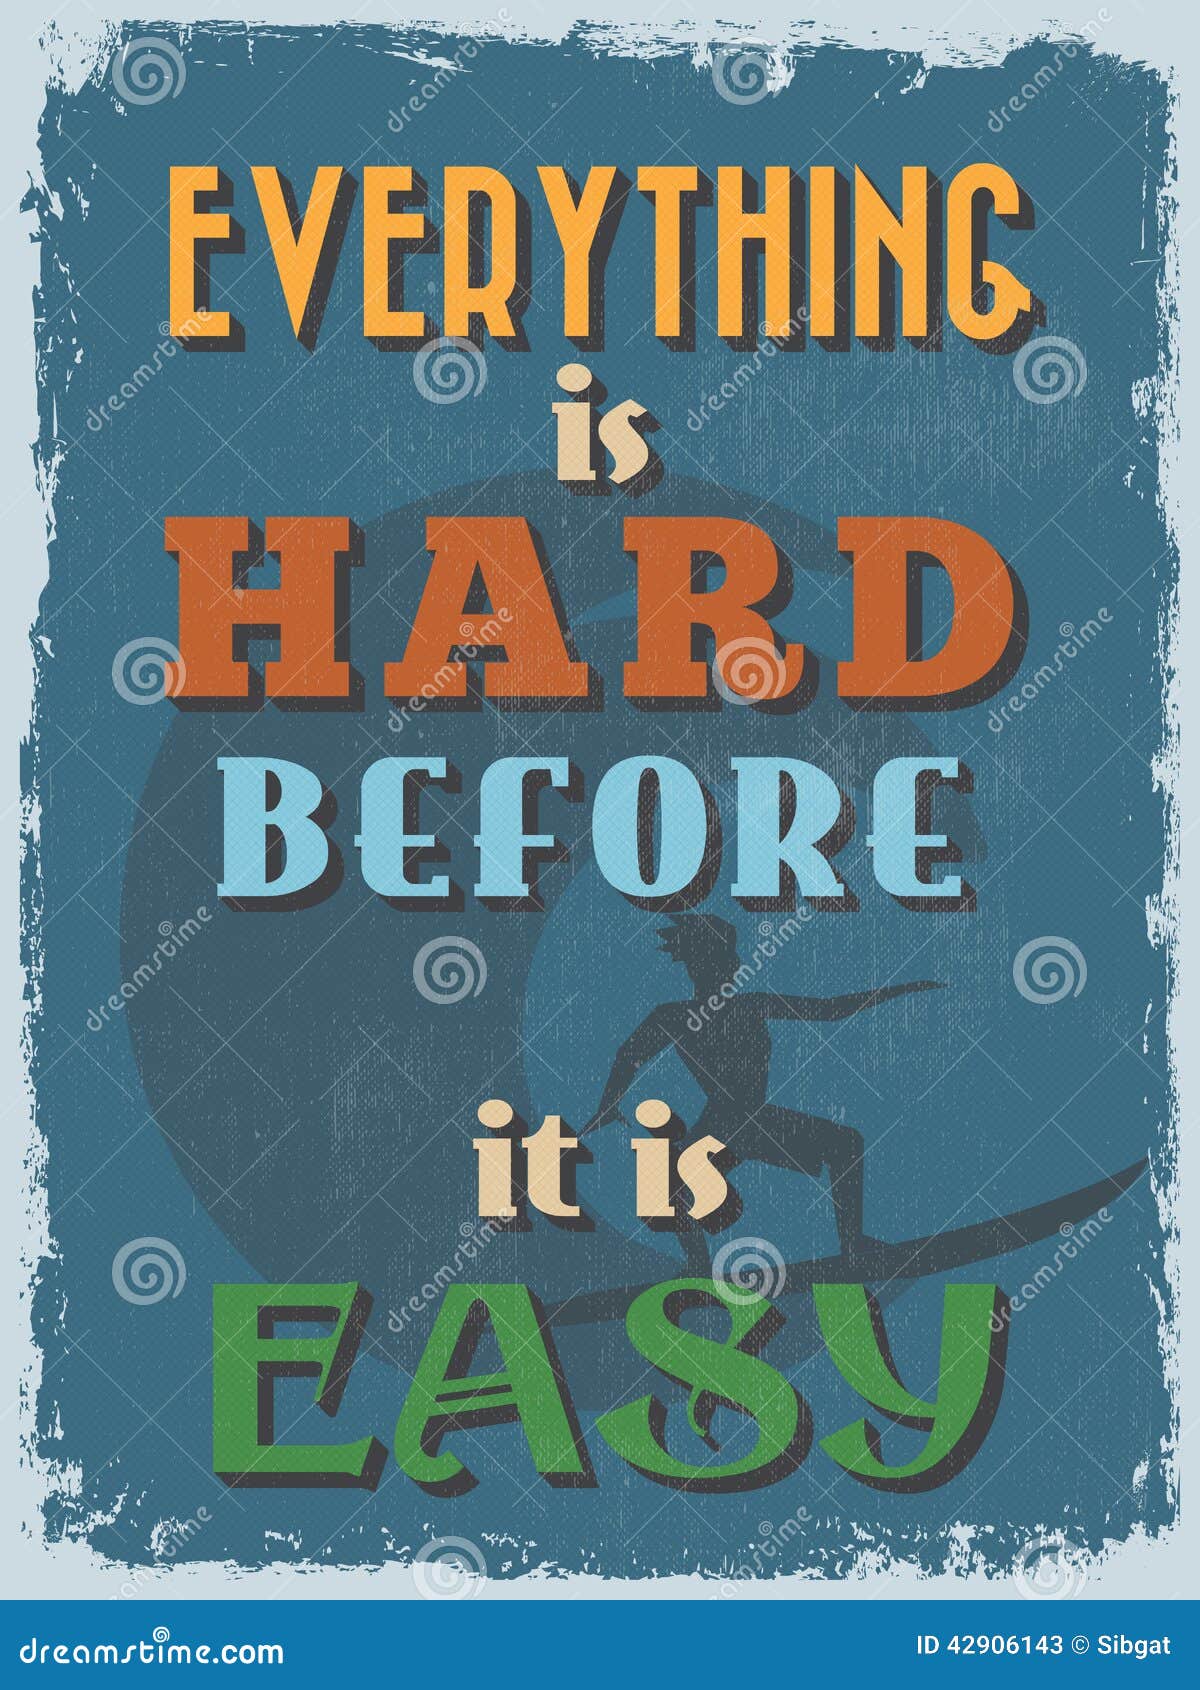 retro vintage motivational quote poster.  